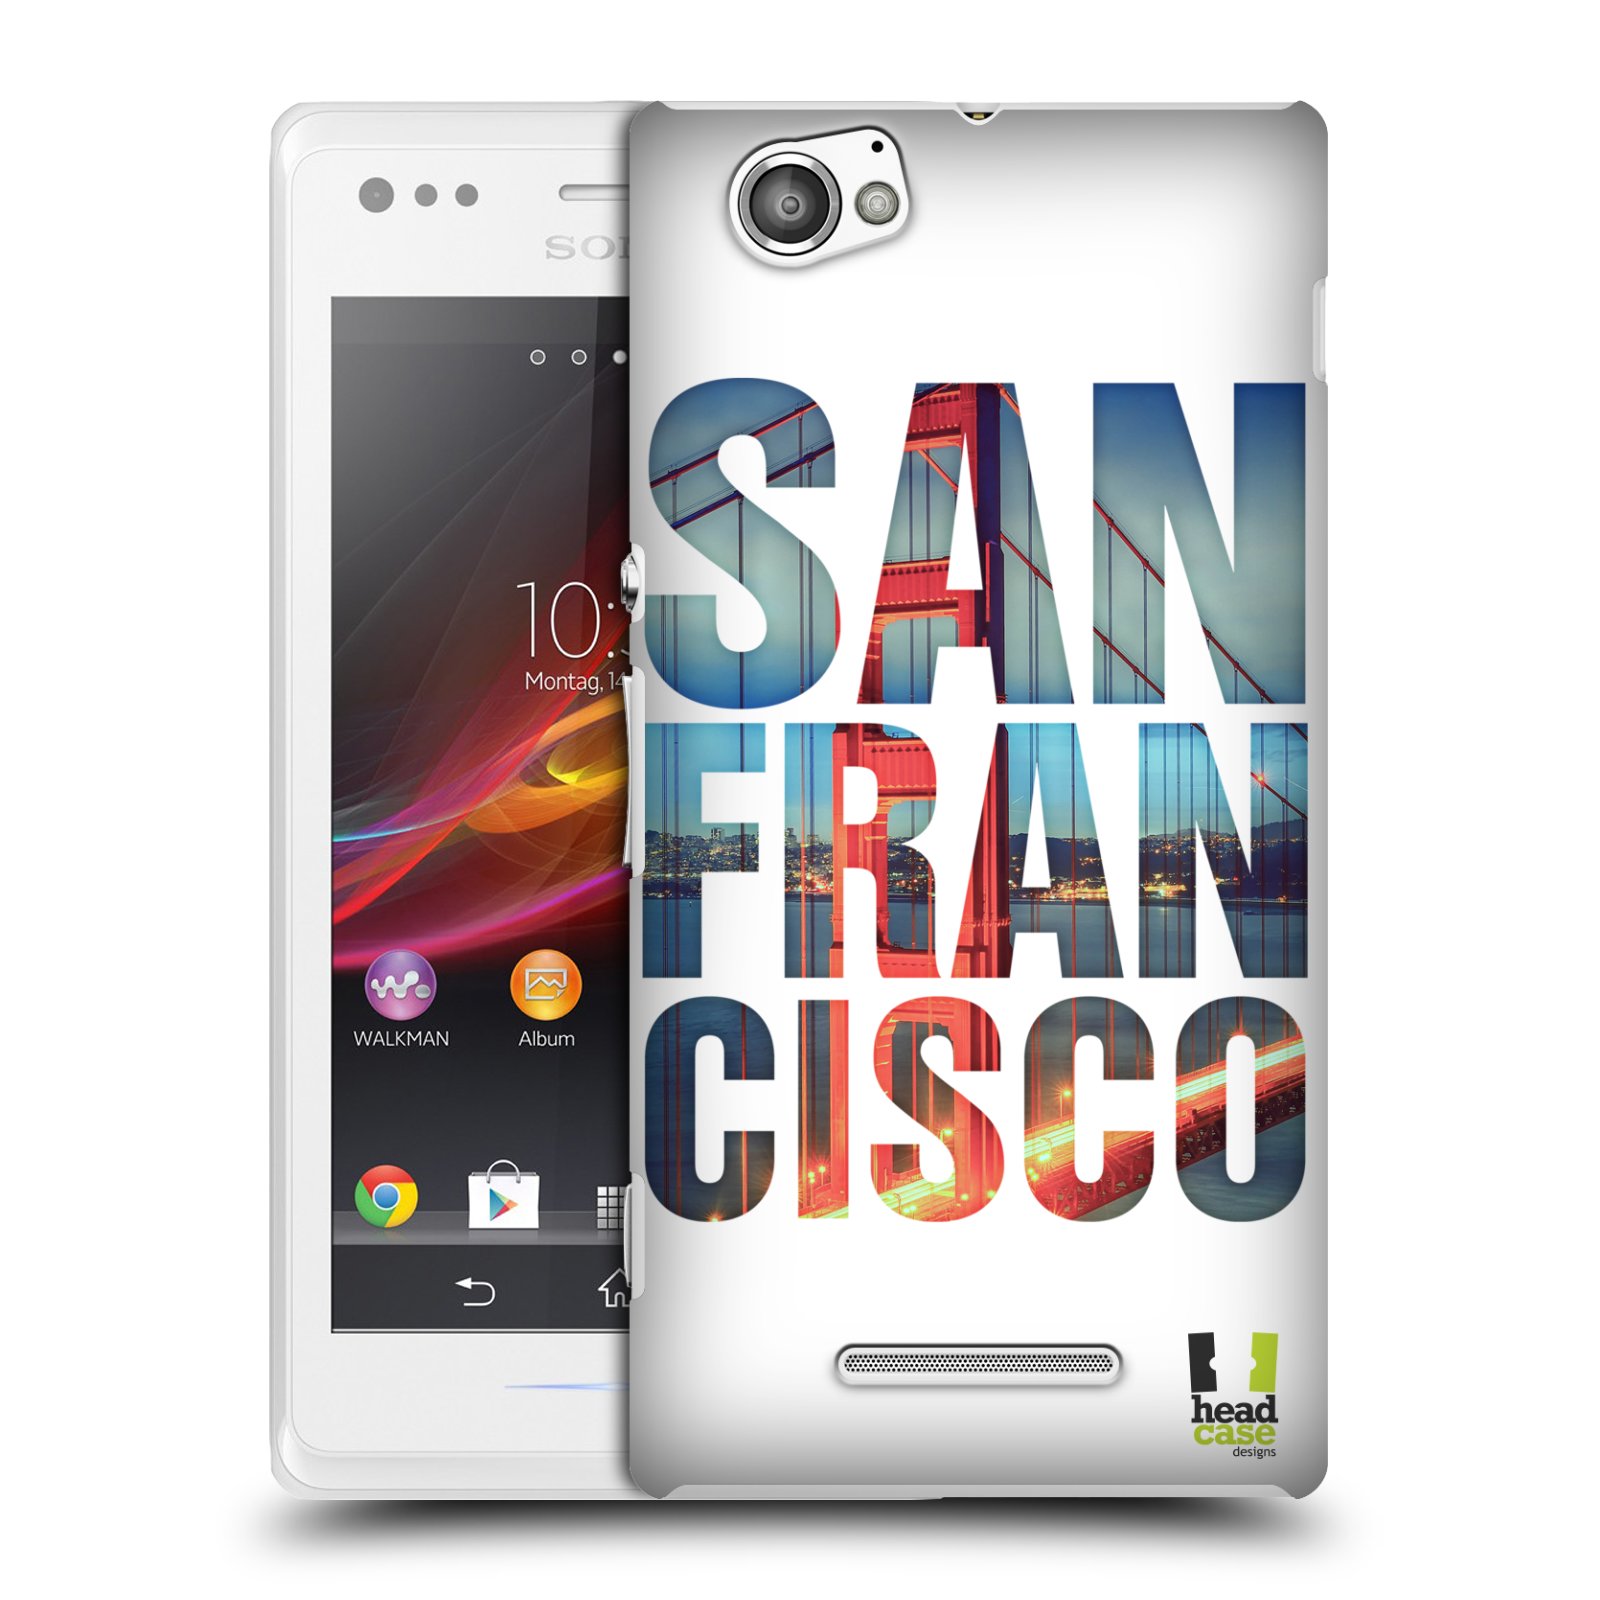 HEAD CASE plastový obal na mobil Sony Xperia M vzor Města foto a nadpis USA, SAN FRANCISCO, MOST